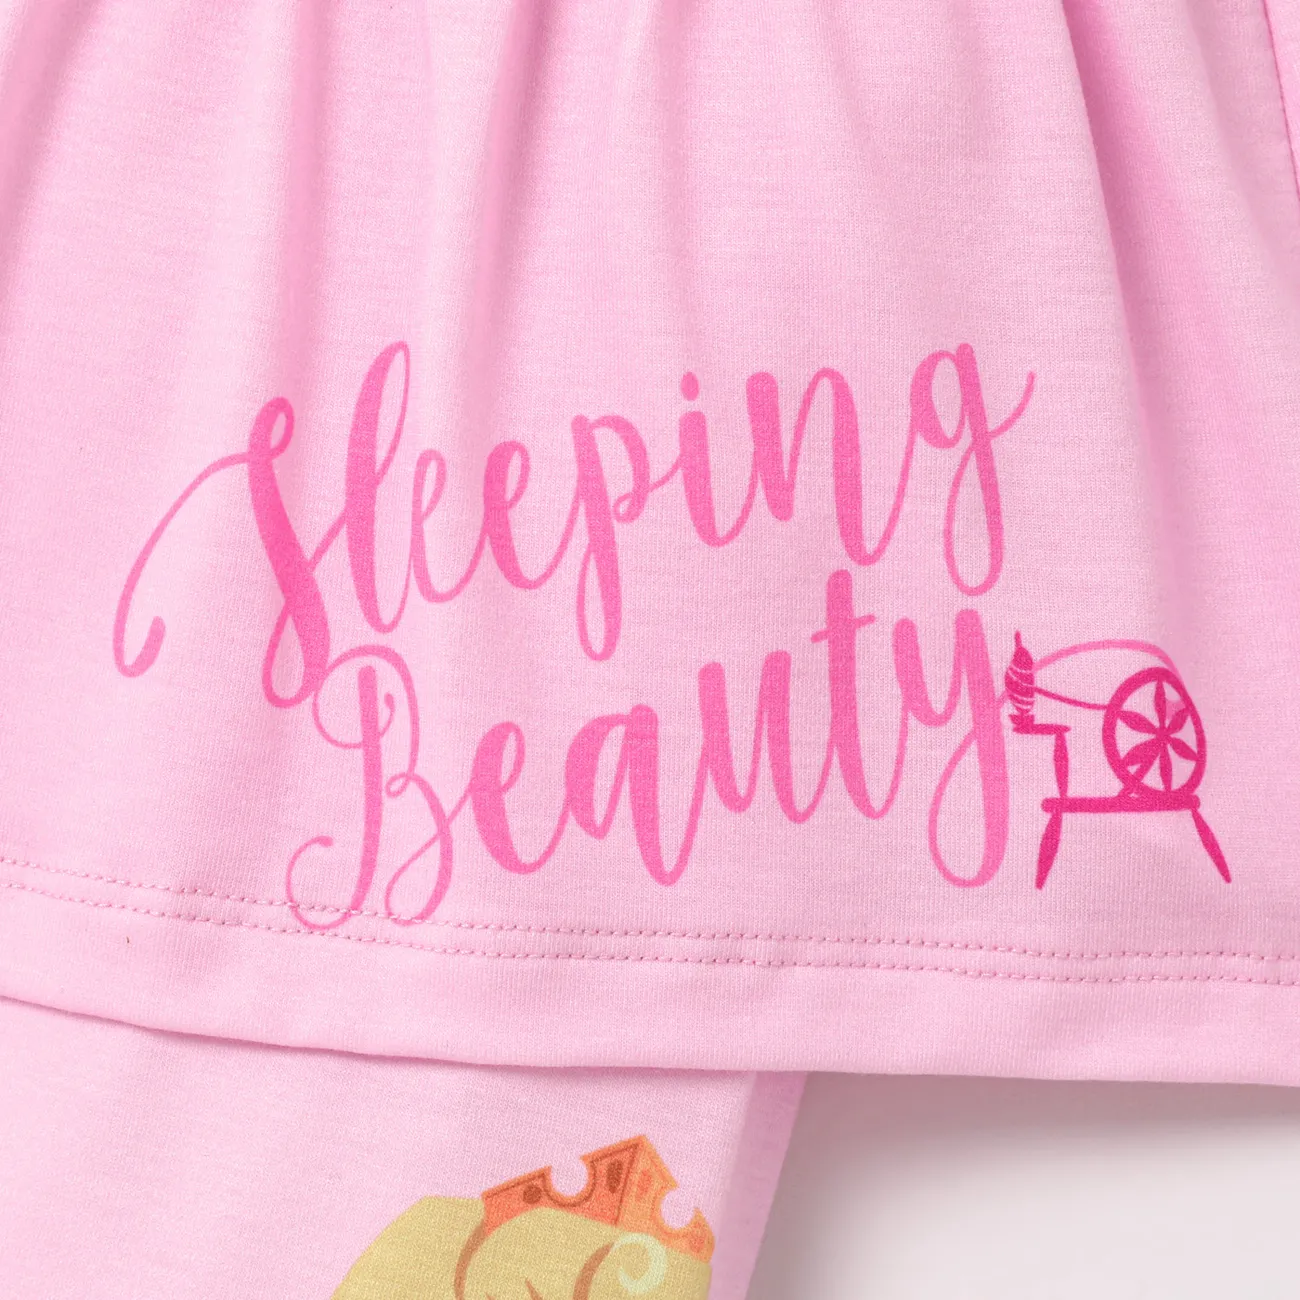 Disney Princess Toddler Girl Naia™ Character Print Ruffle Overlay 2 In 1 Leggings Pink big image 1